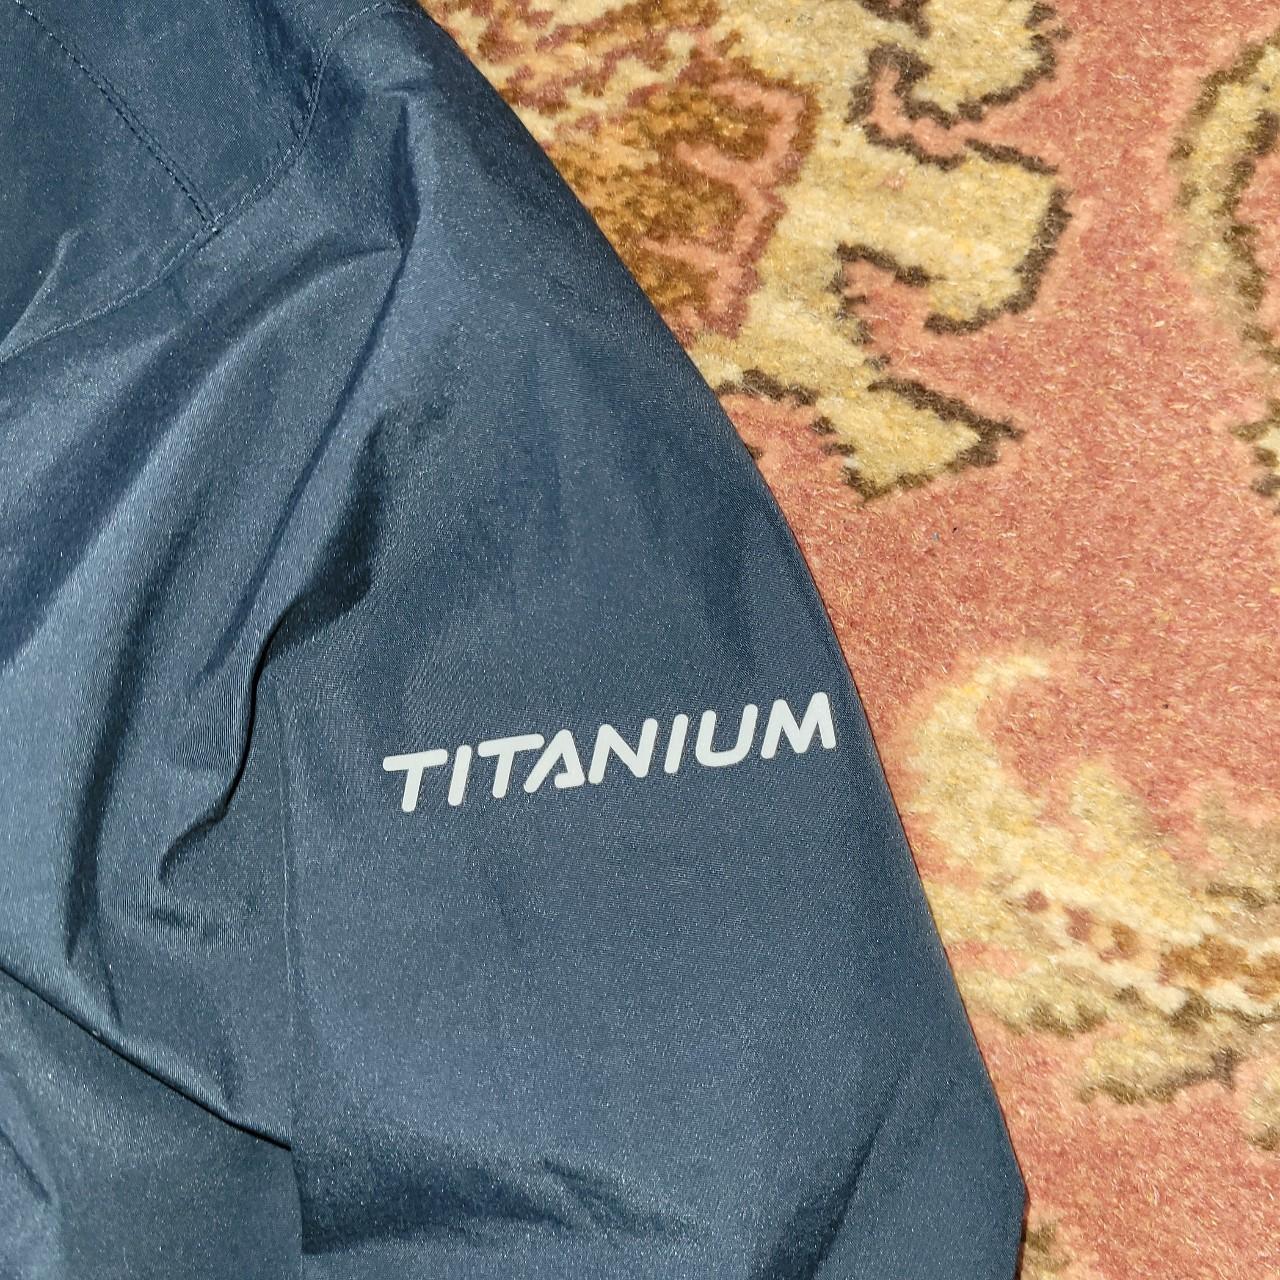 Columbia titanium jacket water proof gorp gore-tex - Depop